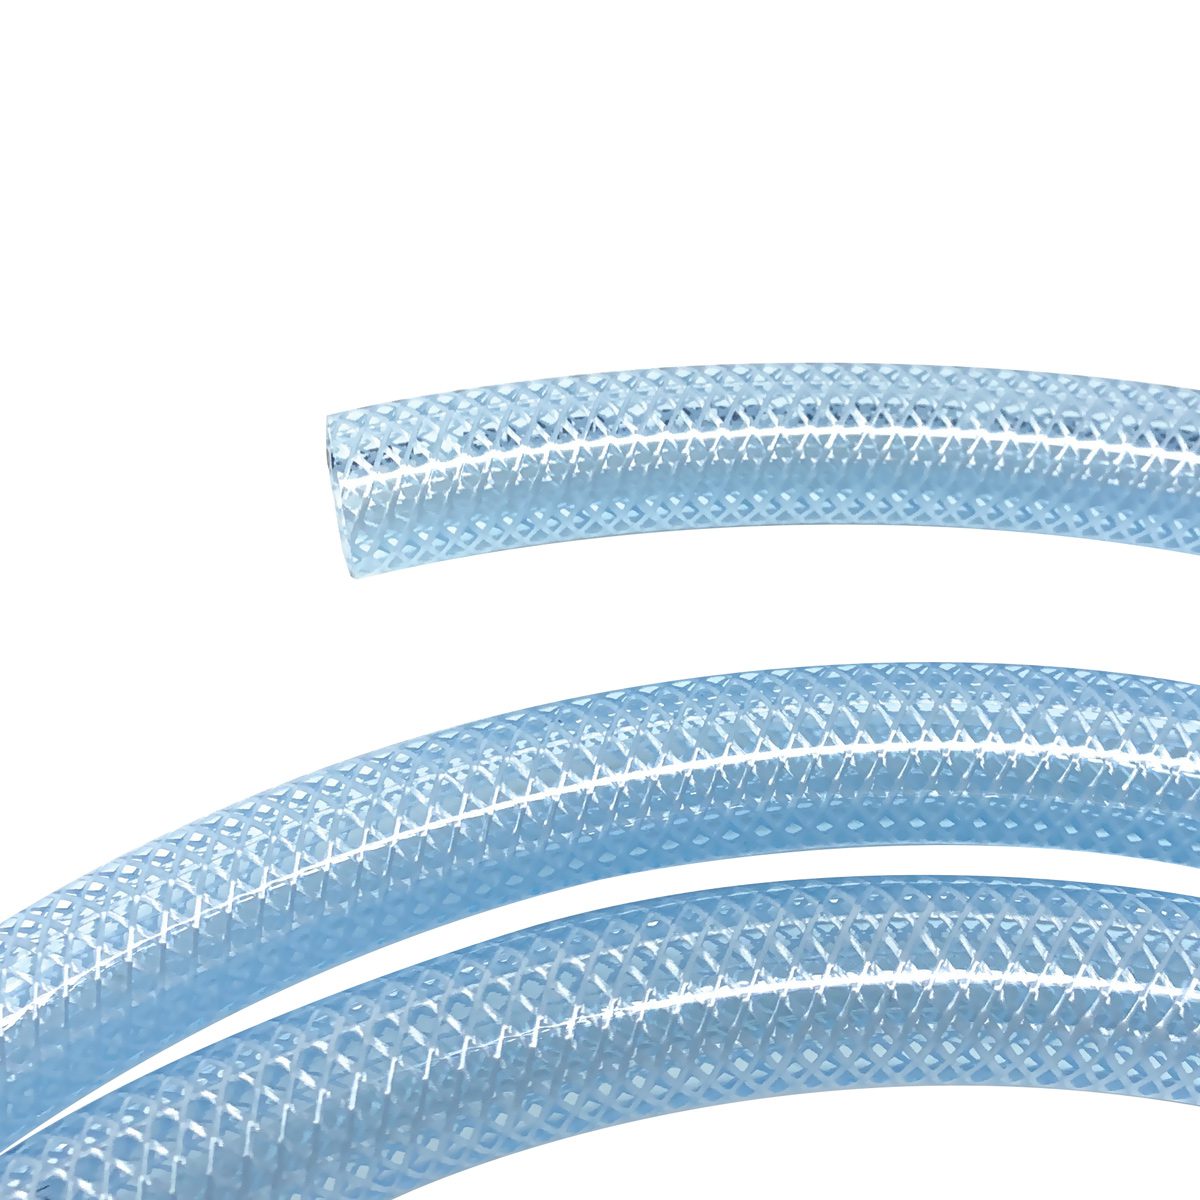 Gloxco Clear Braided PVC Tube, Food Grade Hose, 1/2 ID, 10 Ft Length